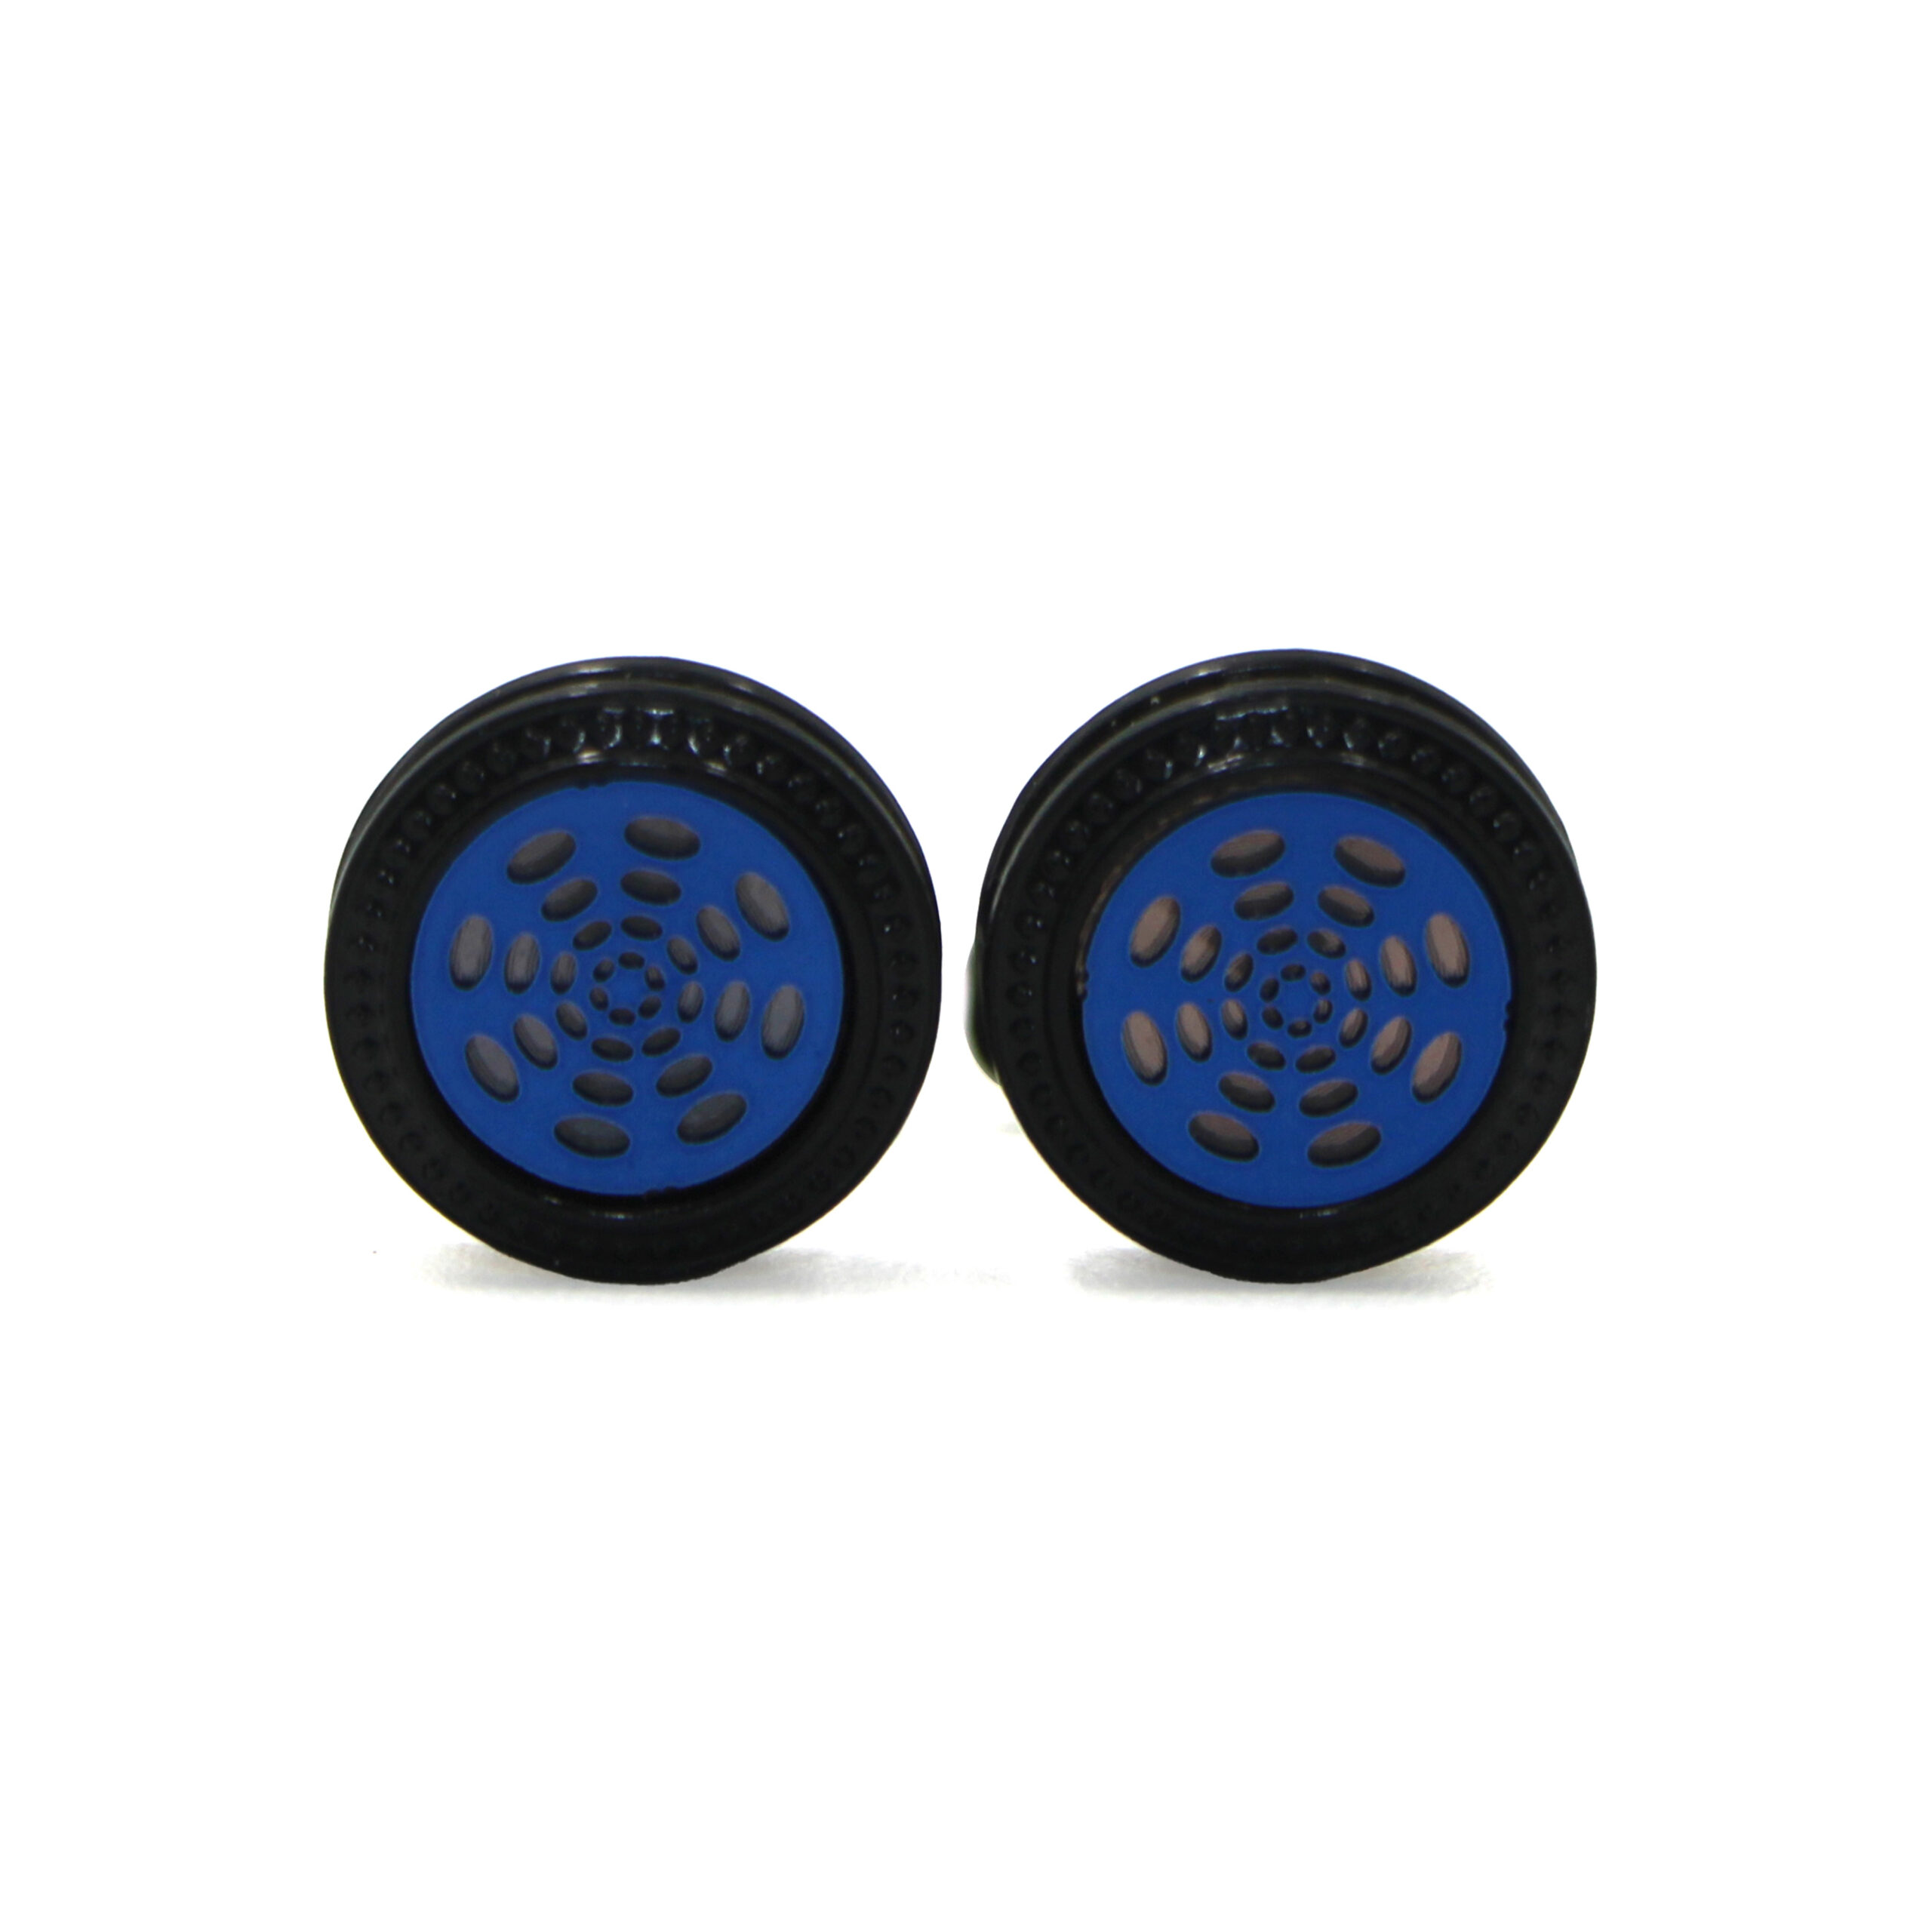 Cufflers Novelty Cufflinks with Free Gift Box – Stylish Black and Blue Round Design – CU-2012